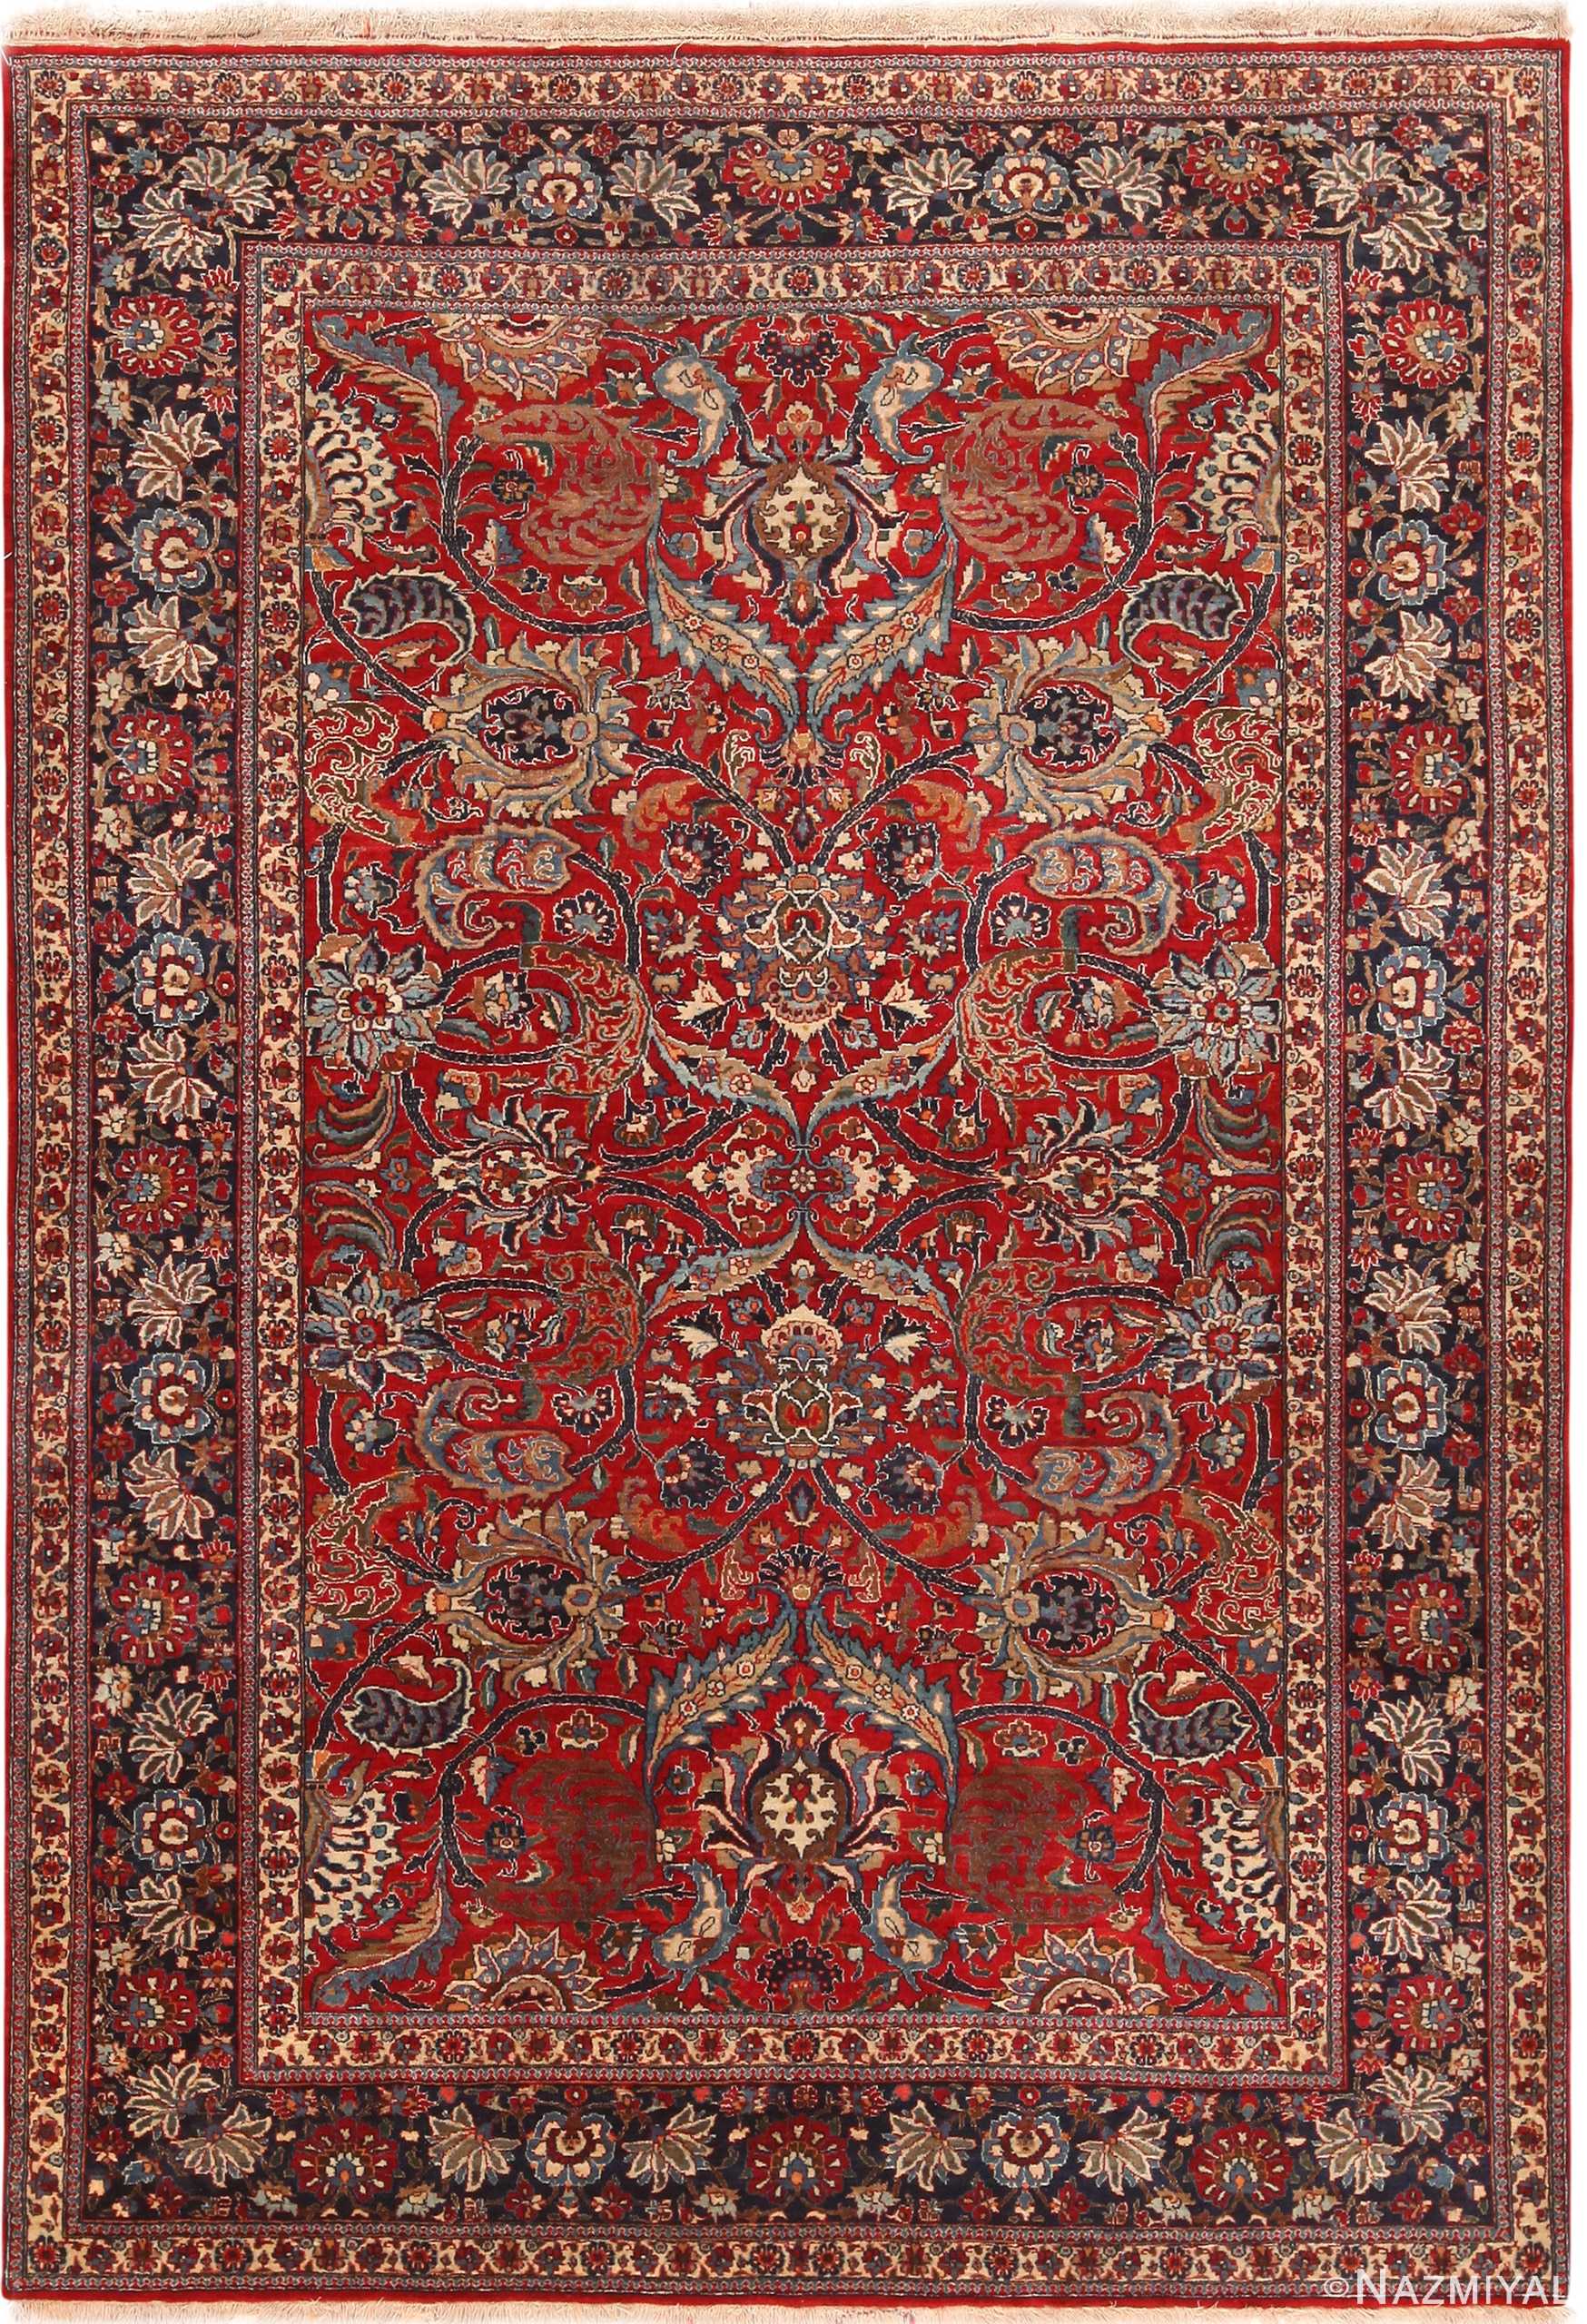 Splendid Antique Persian Isfahan Rug 71120 by Nazmiyal Antique Rugs